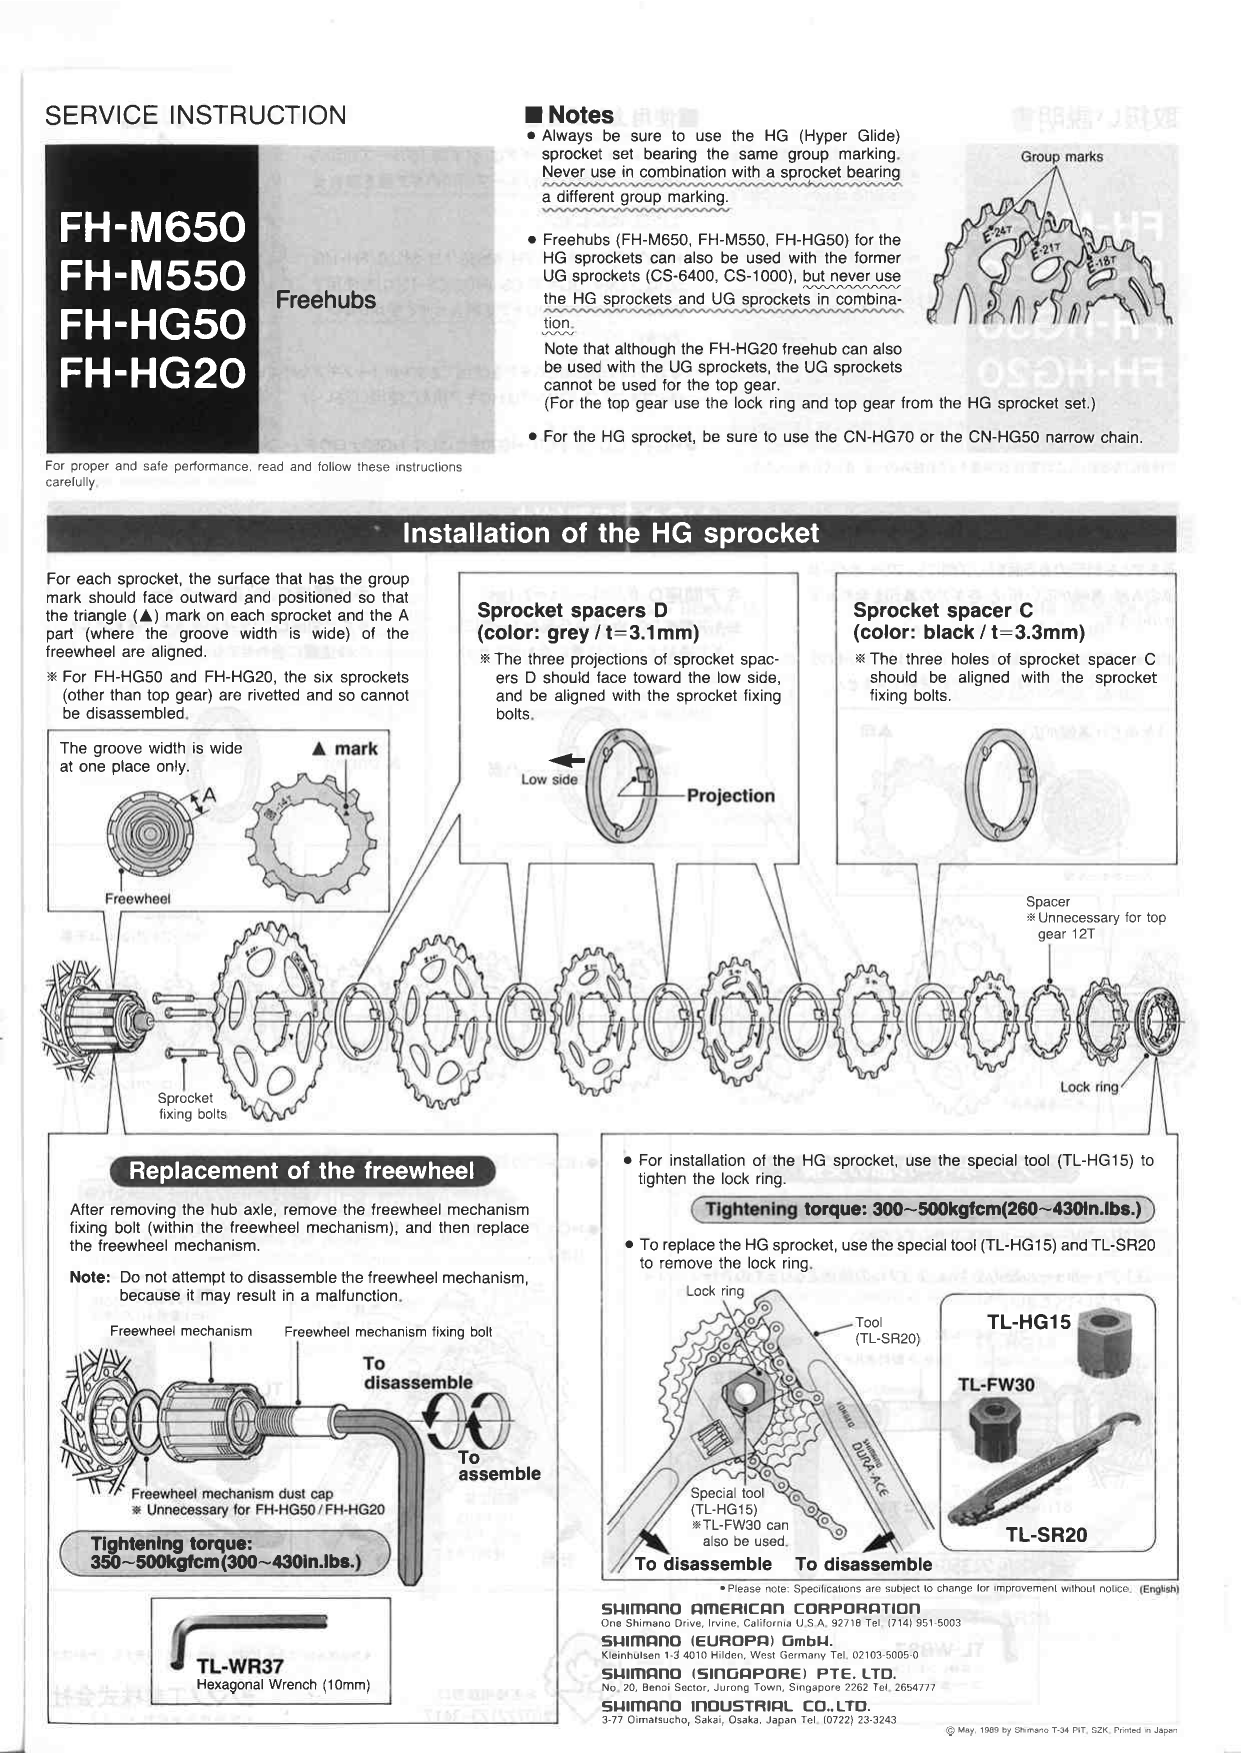 Shimano Fh M550 Cs 1000 Fh Hg50 Fh Hg Fh M650 Cs 6400 User Manual Manualzz